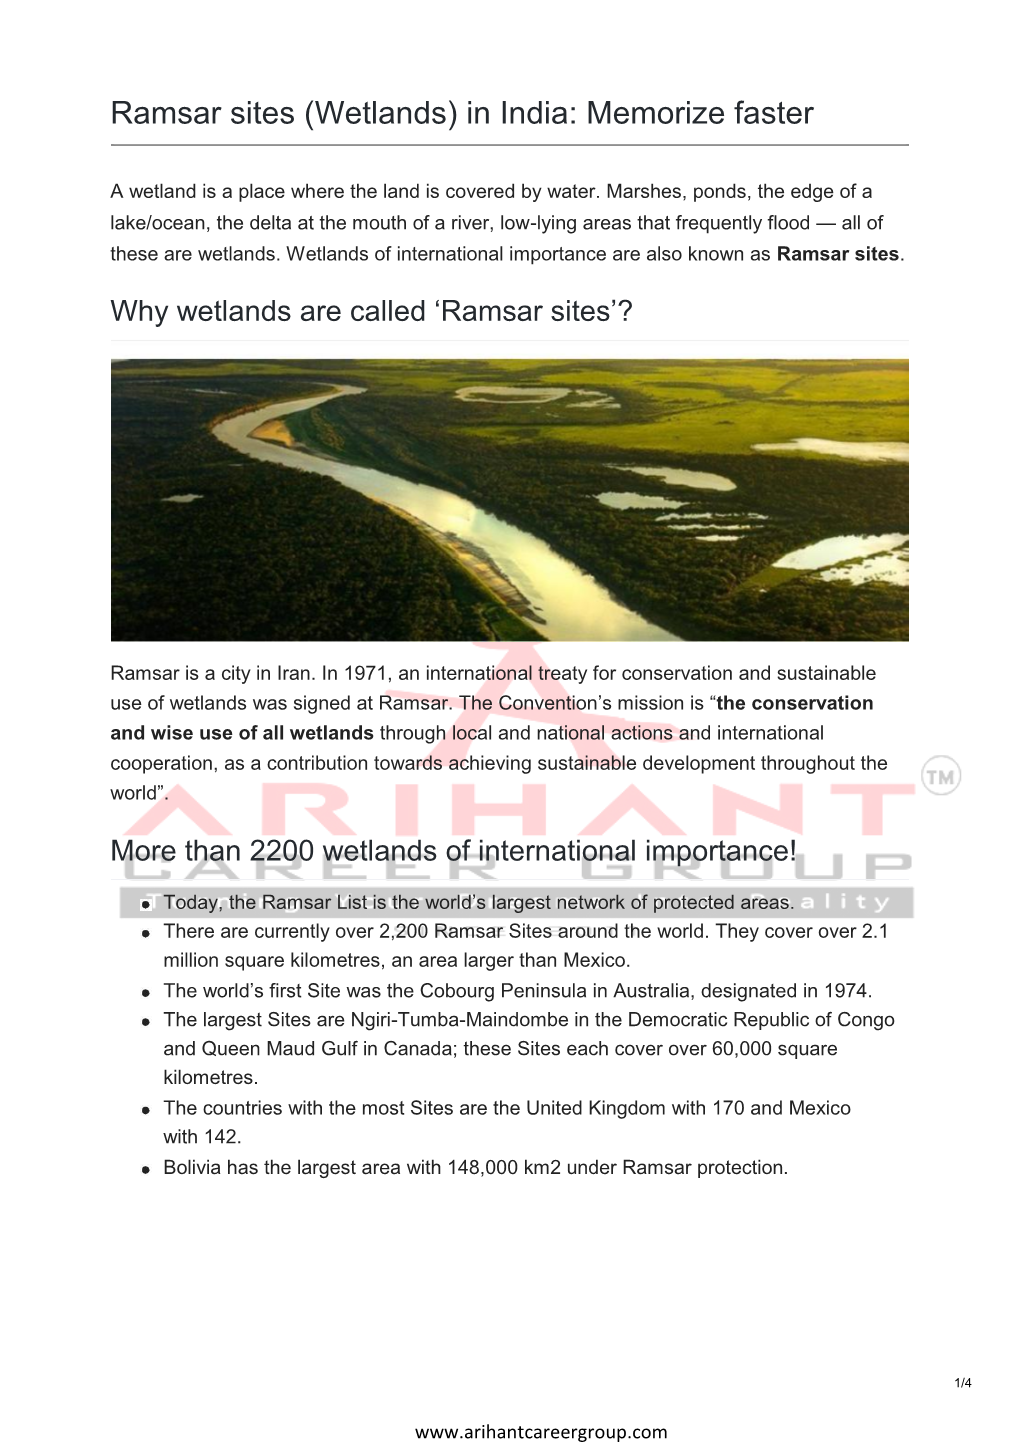 Ramsar Sites (Wetlands) in India: Memorize Faster